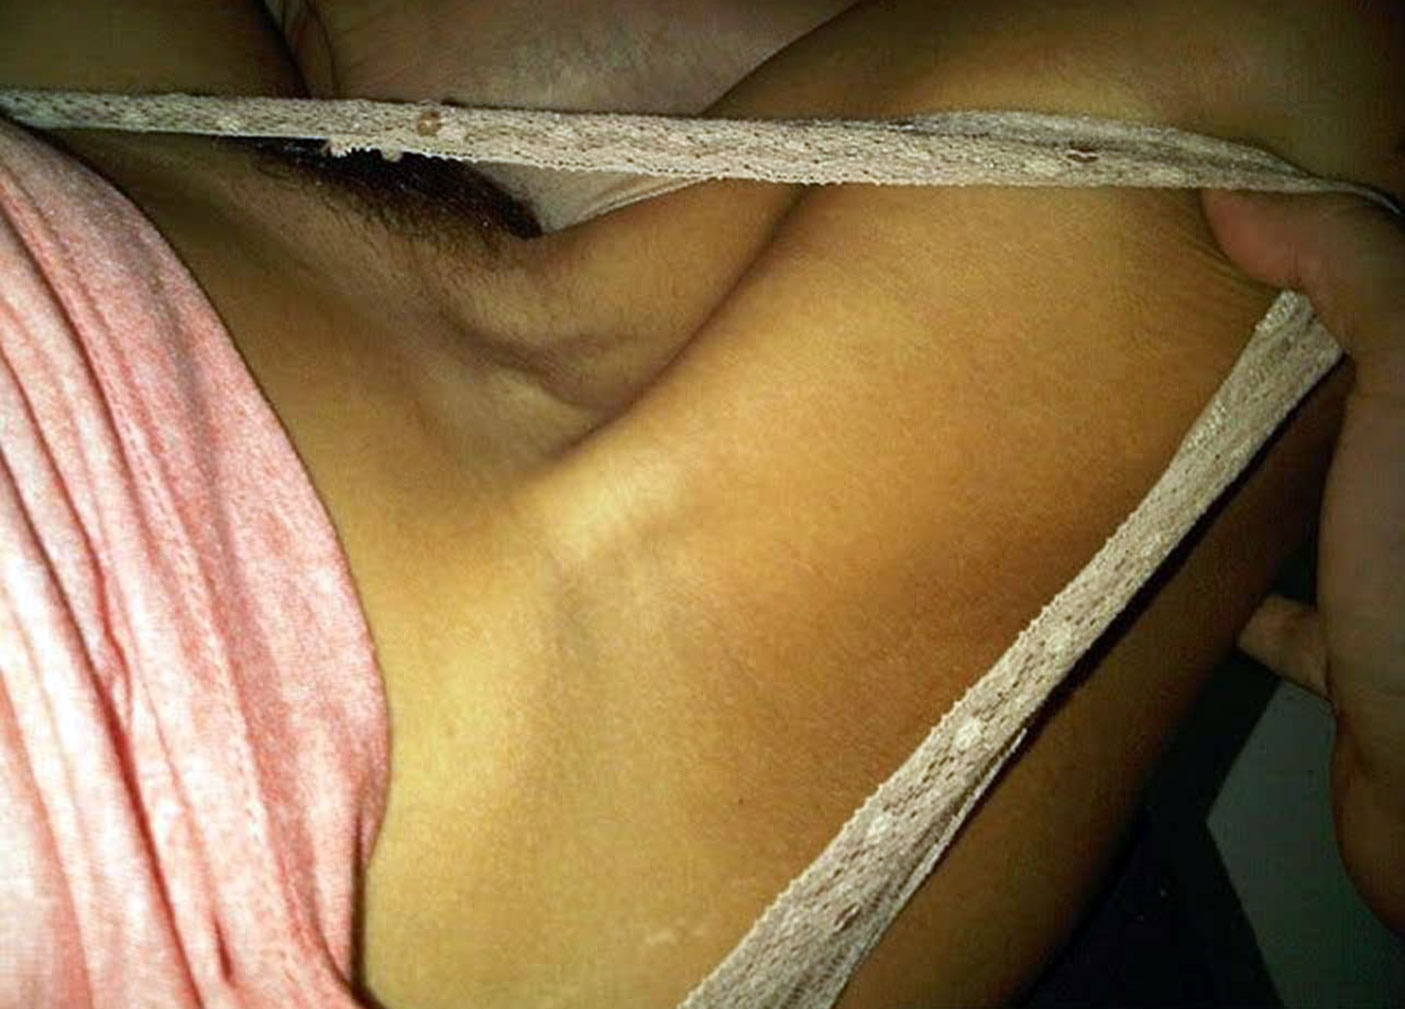 Carolina Dieckmann Nude Photos and Leaked Porn - ScandalPost